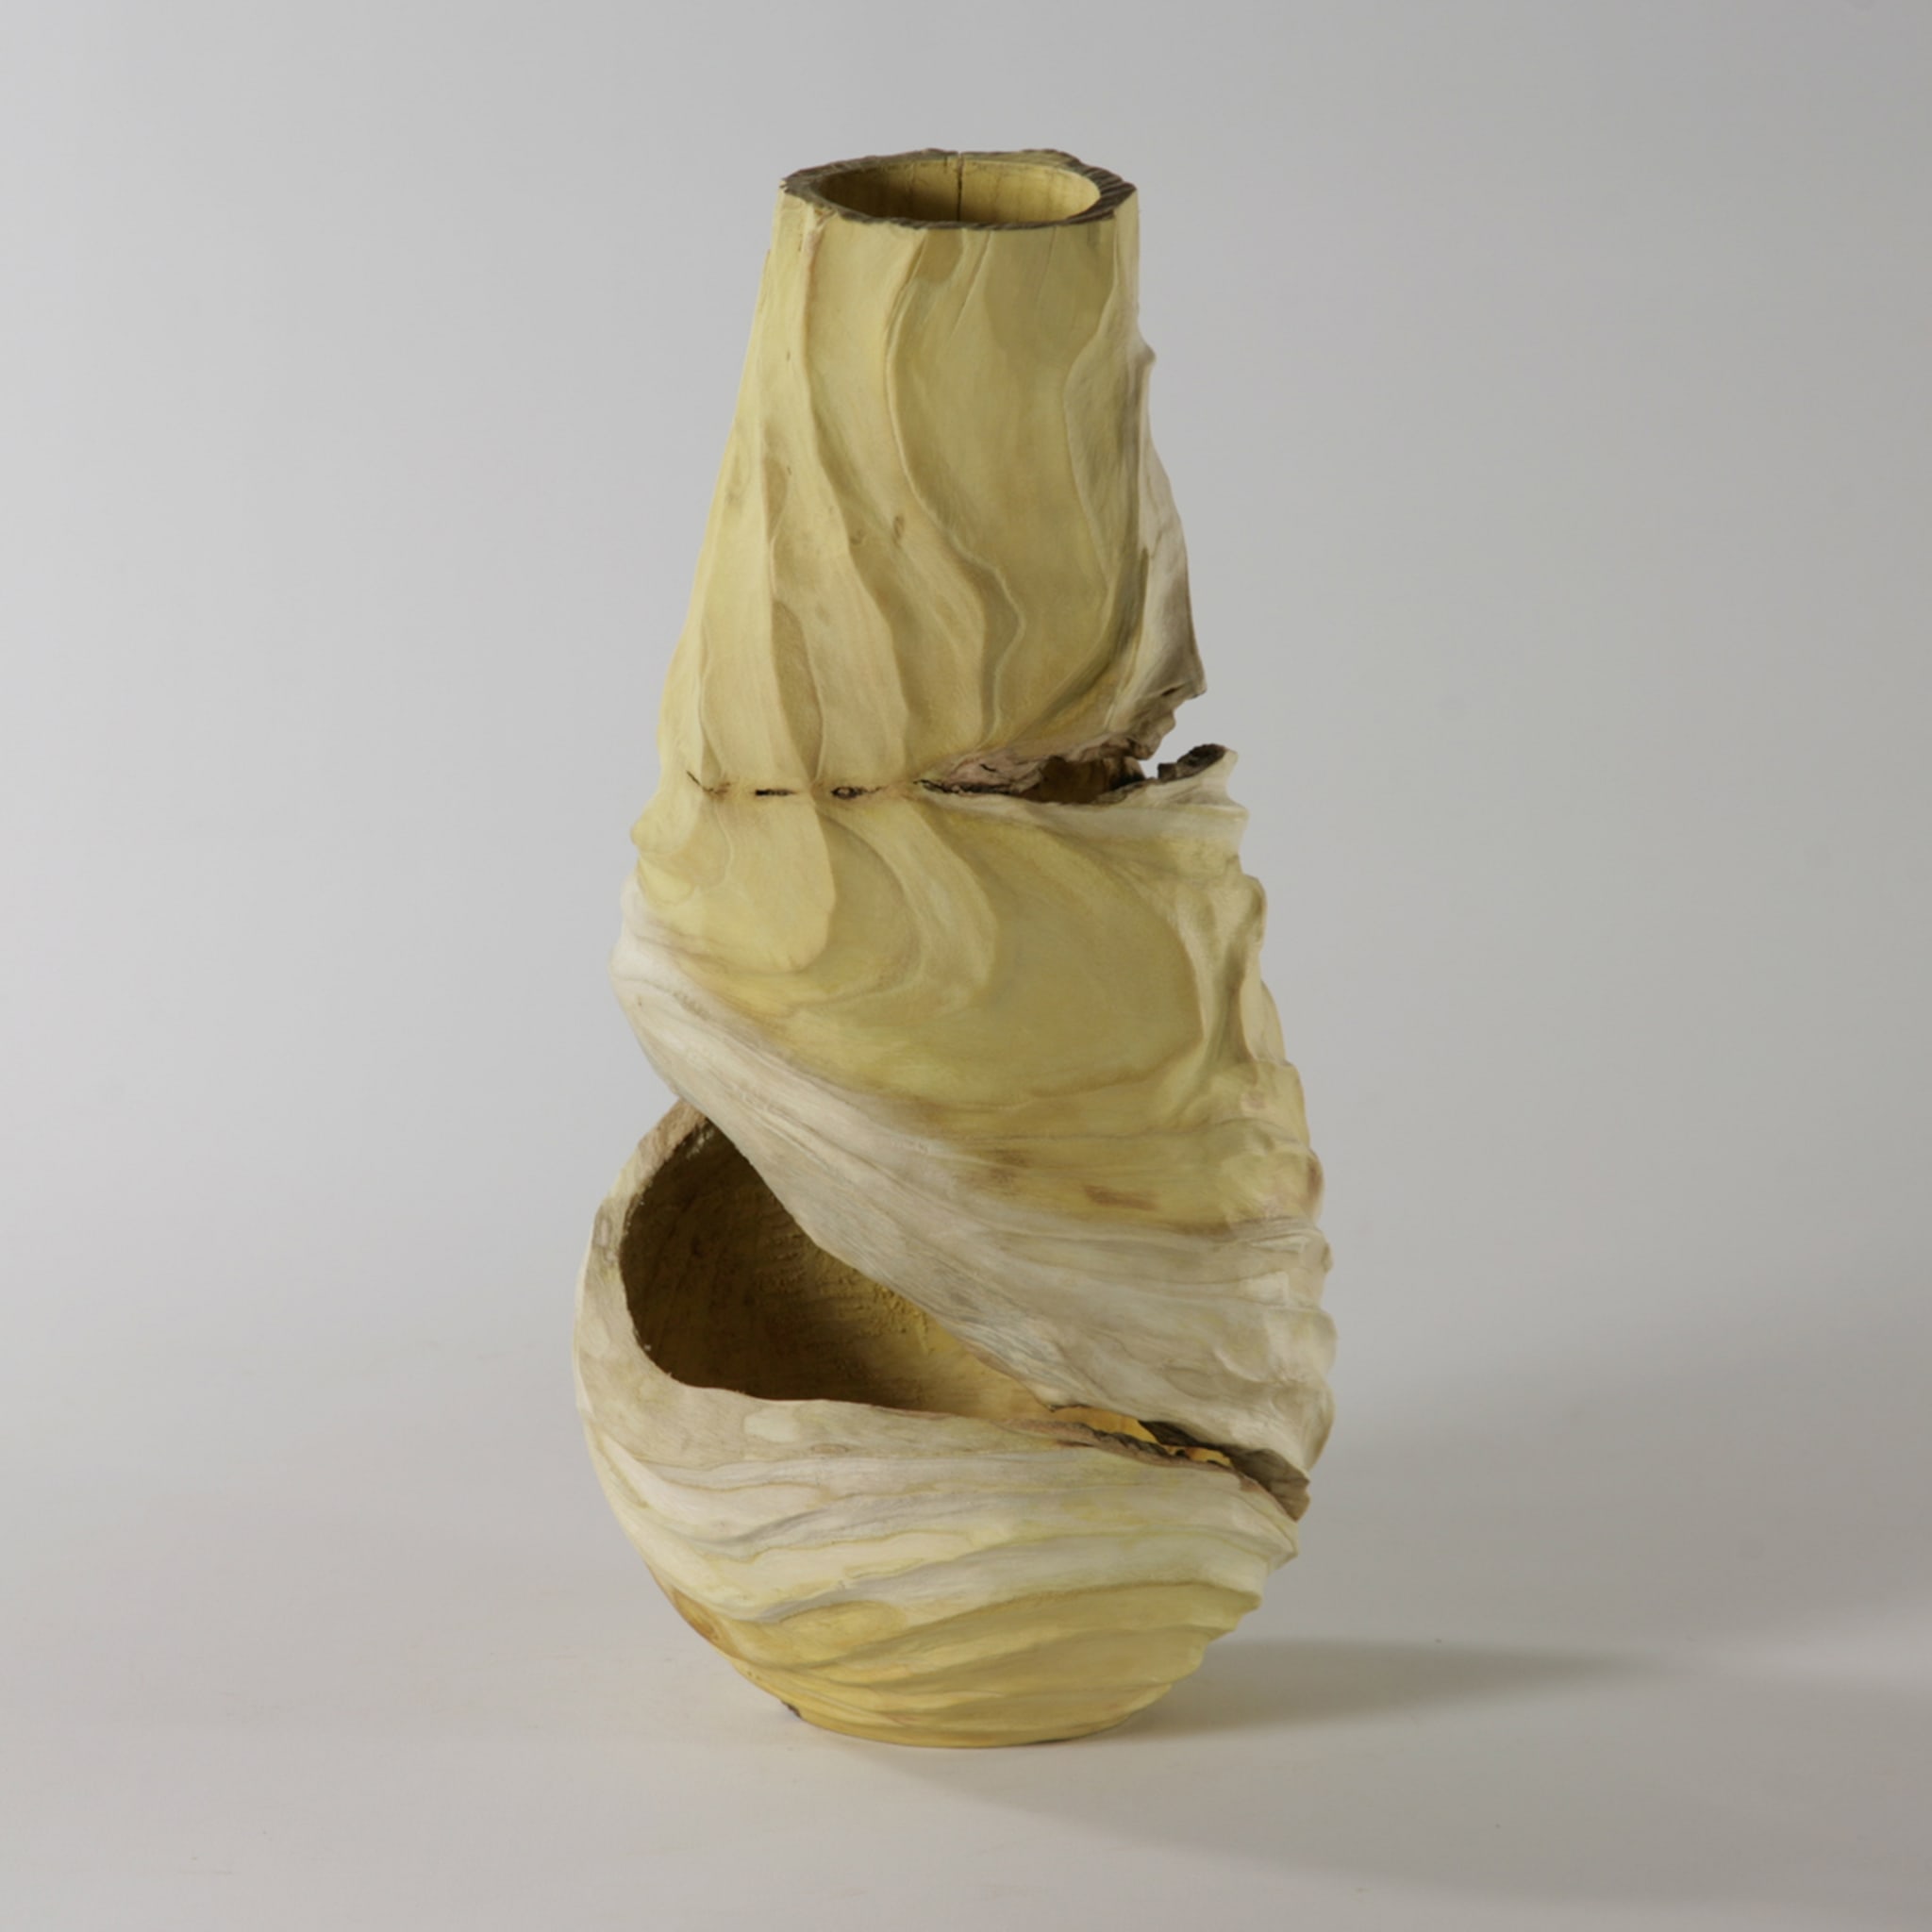 FTG Turned Wooden Vase #2 - Alternative view 1